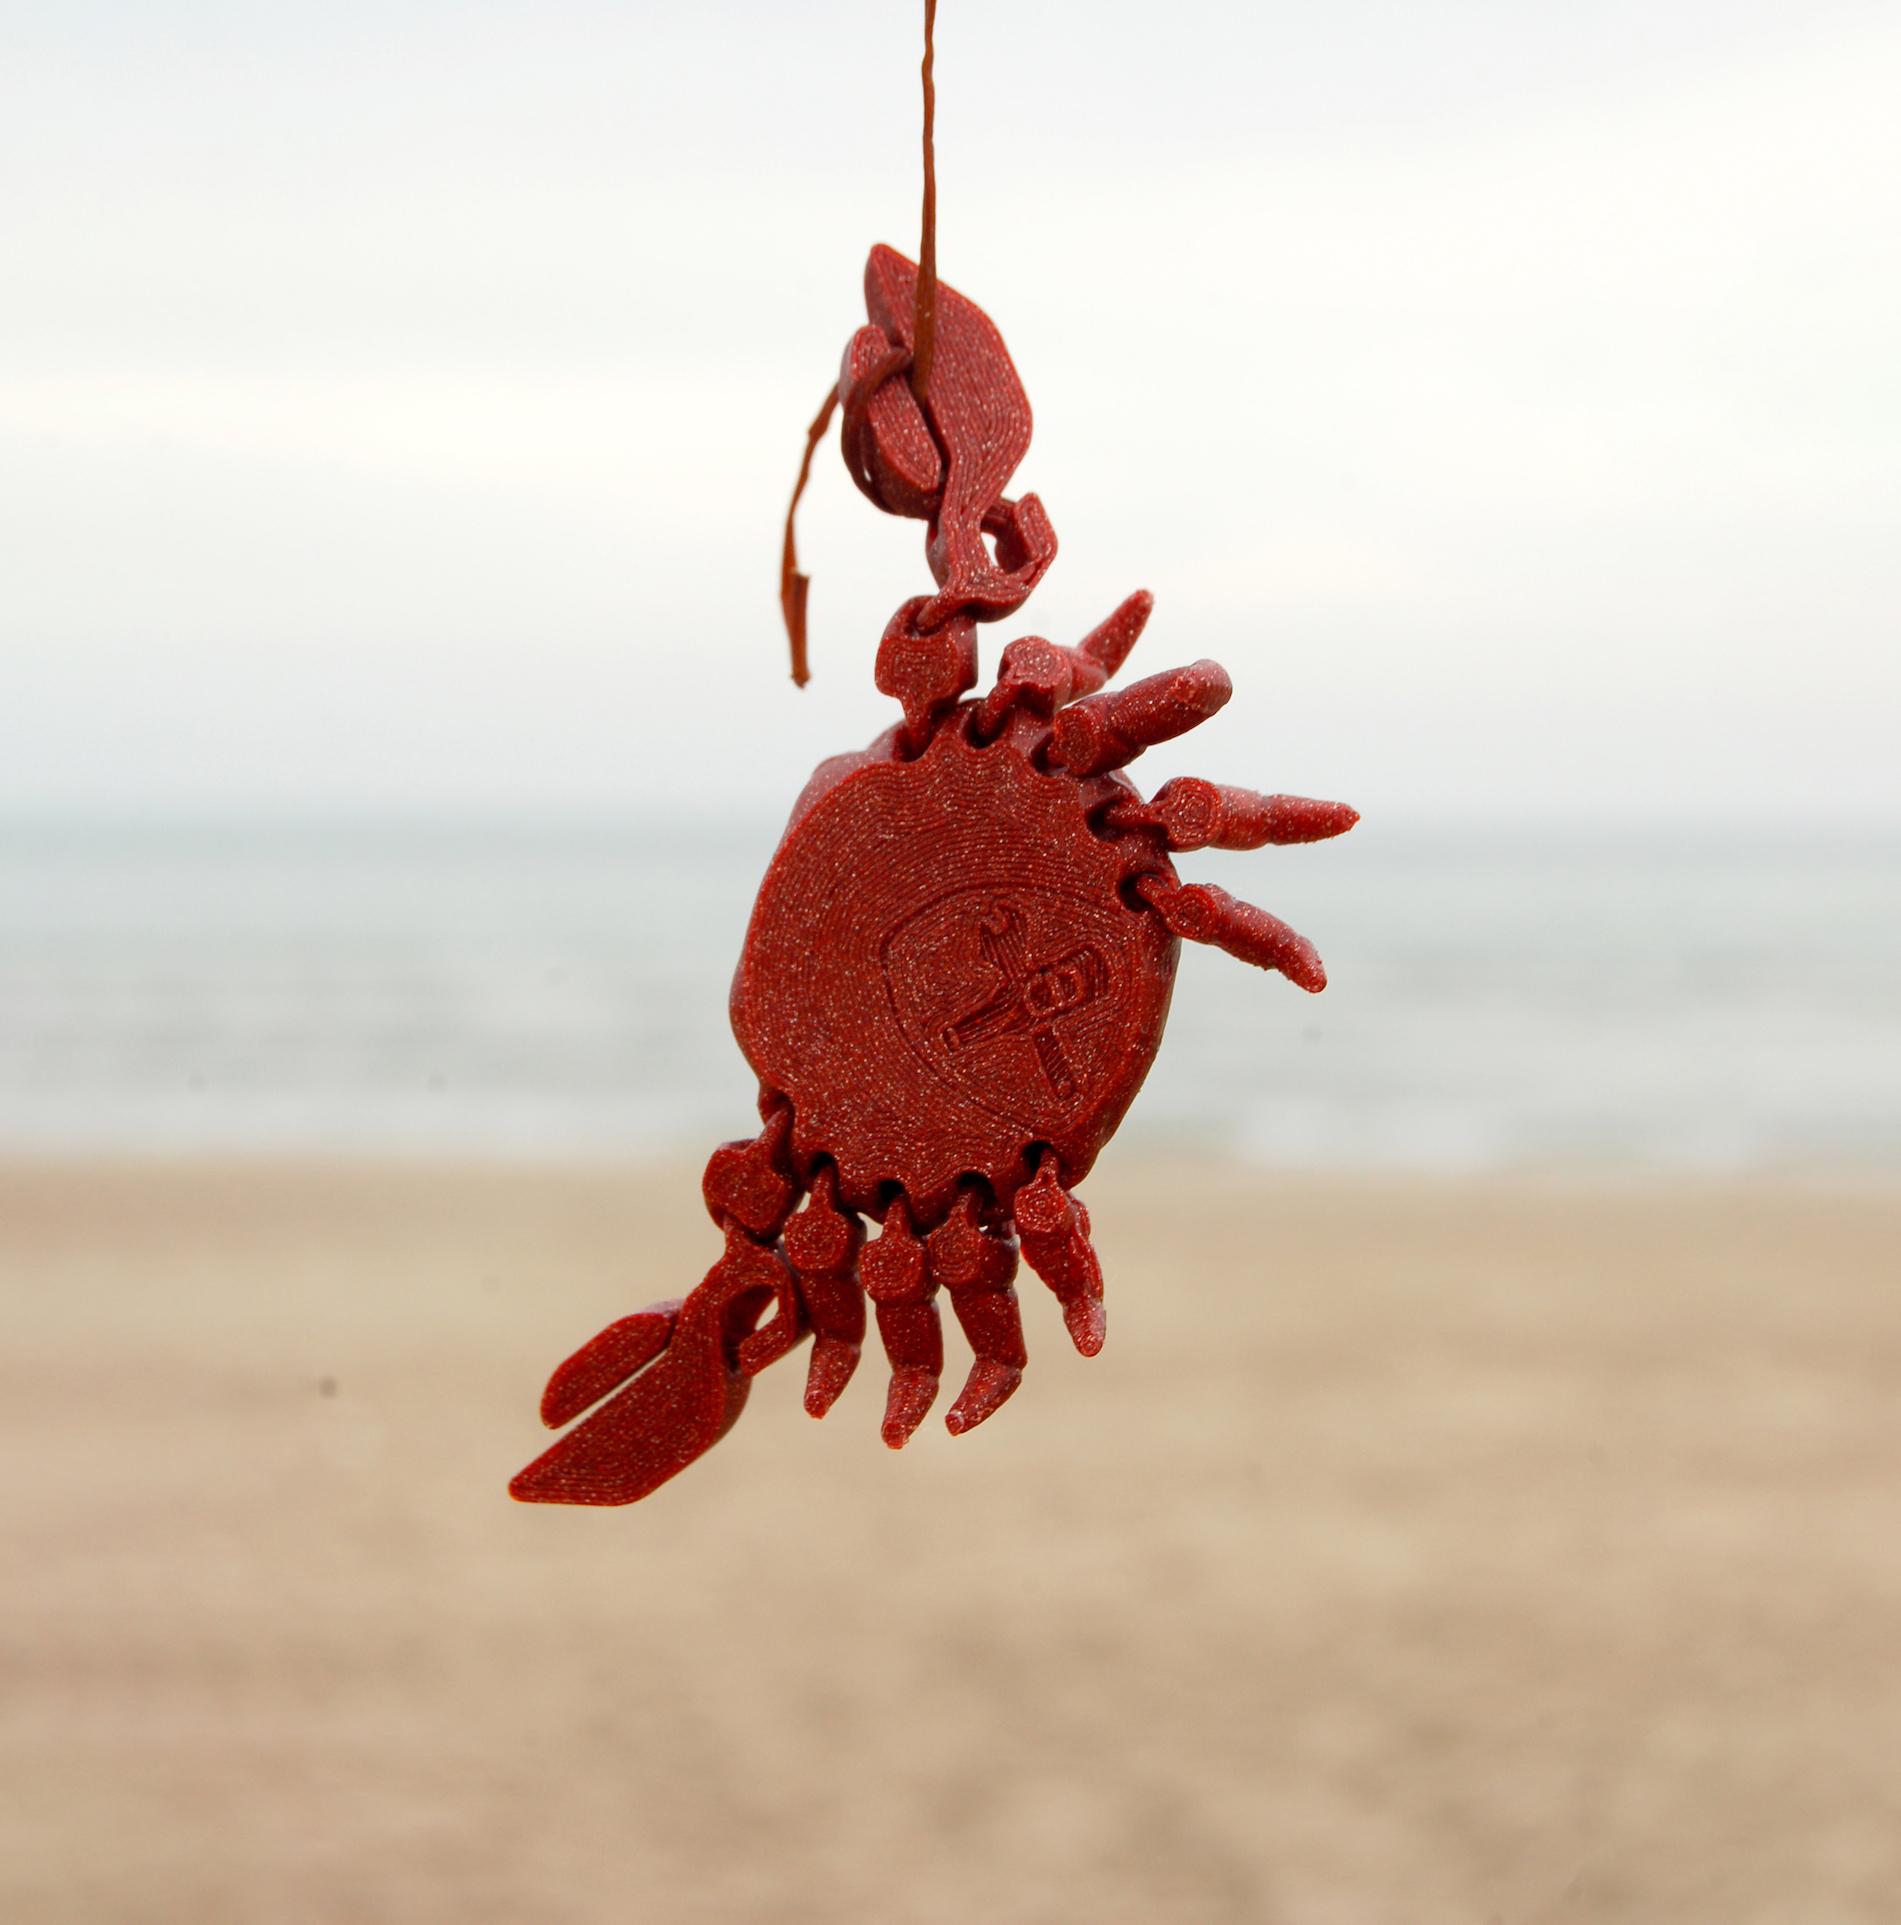 Articulated Crab 3d model